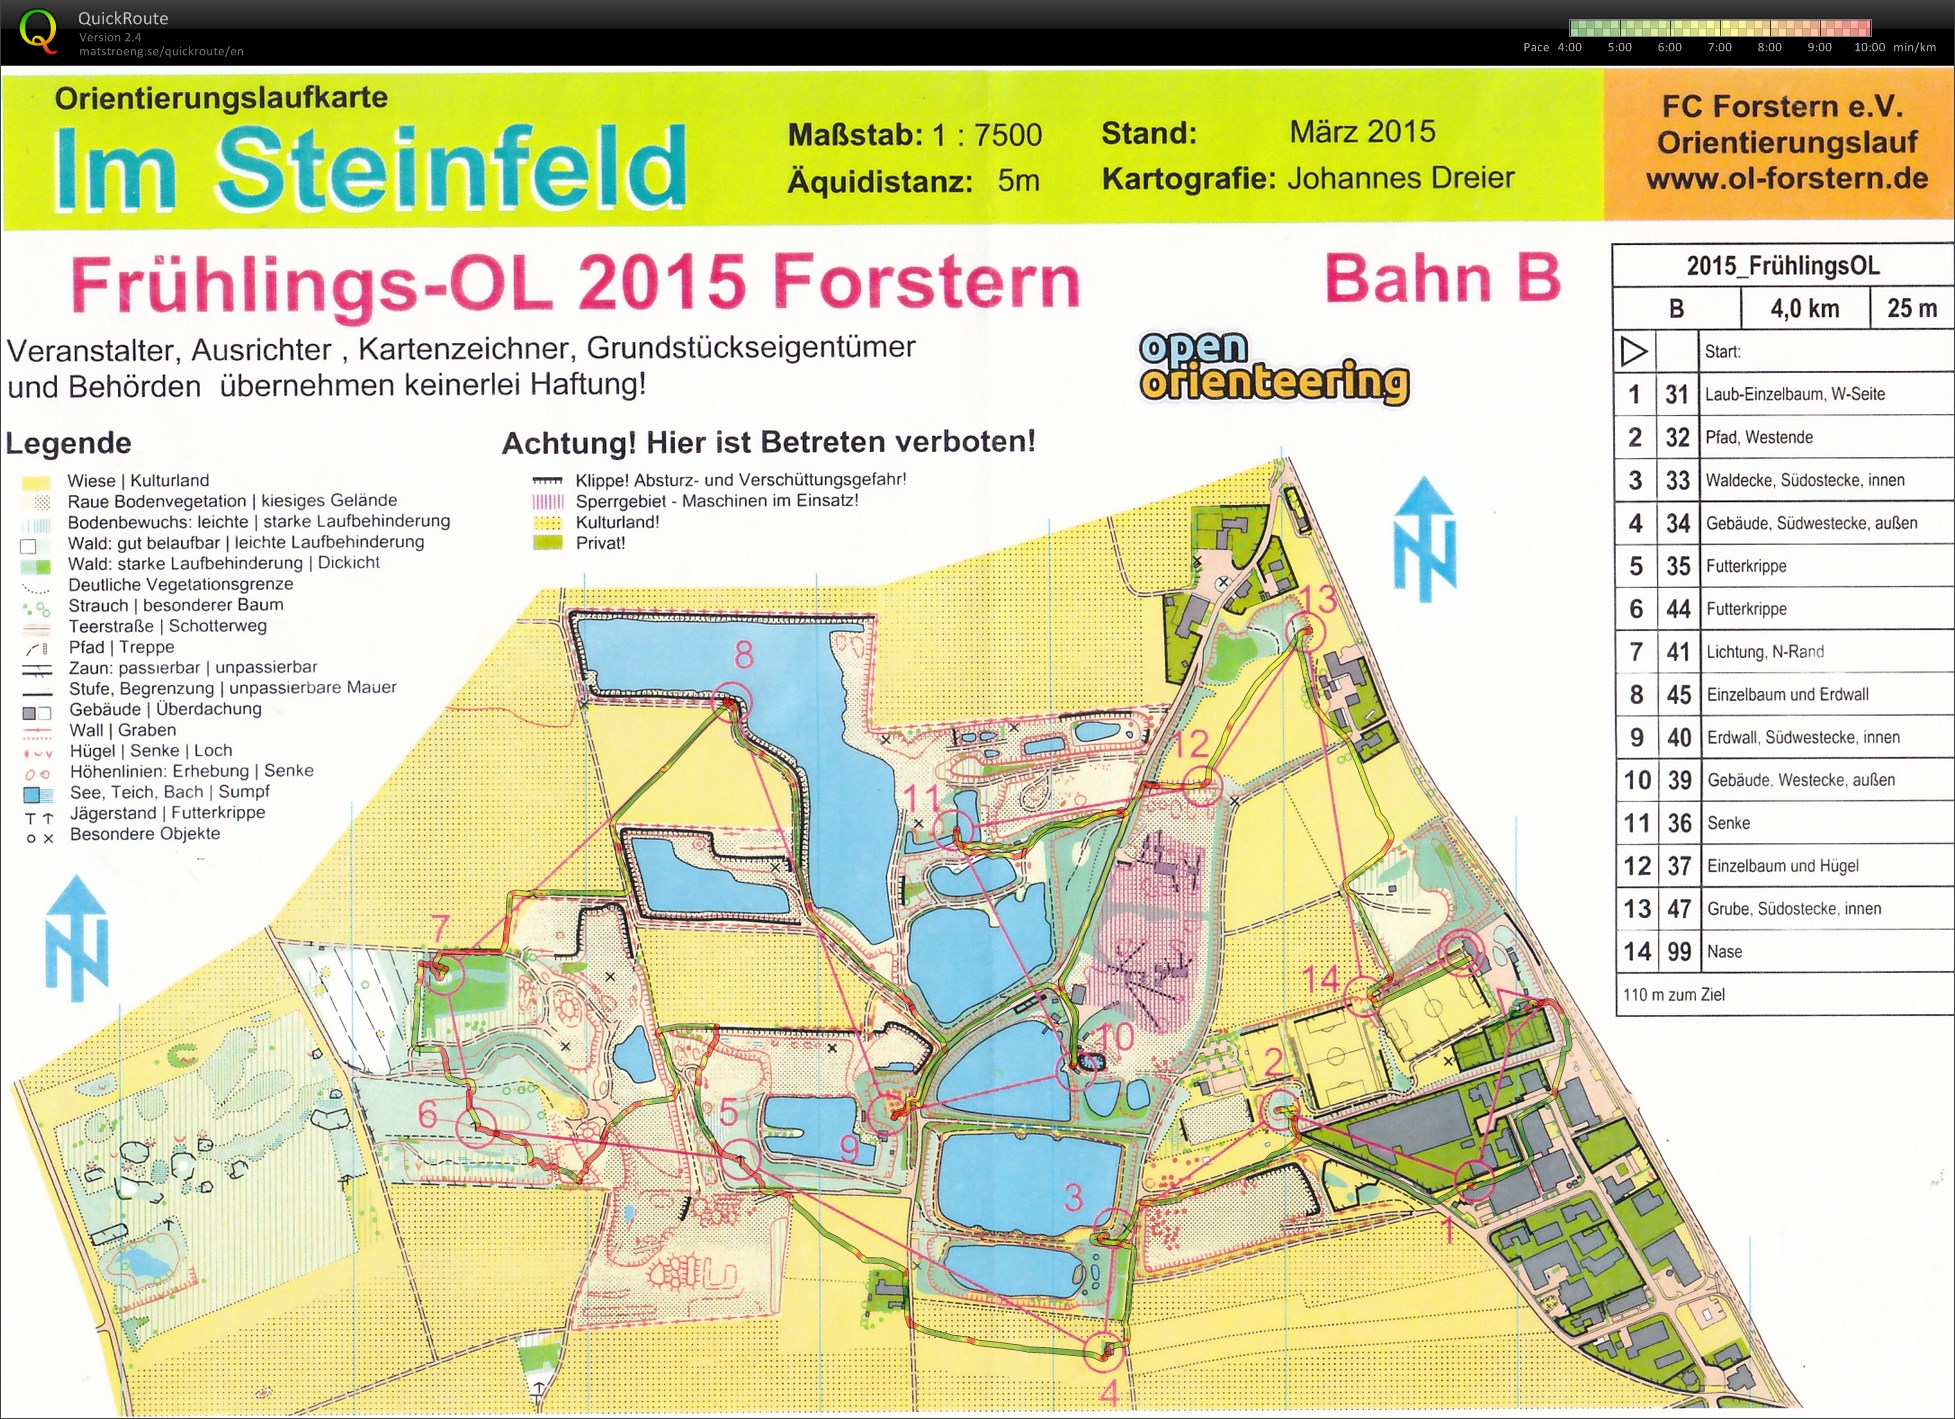 Frühlings-OL 2015 Forstern (29-03-2015)